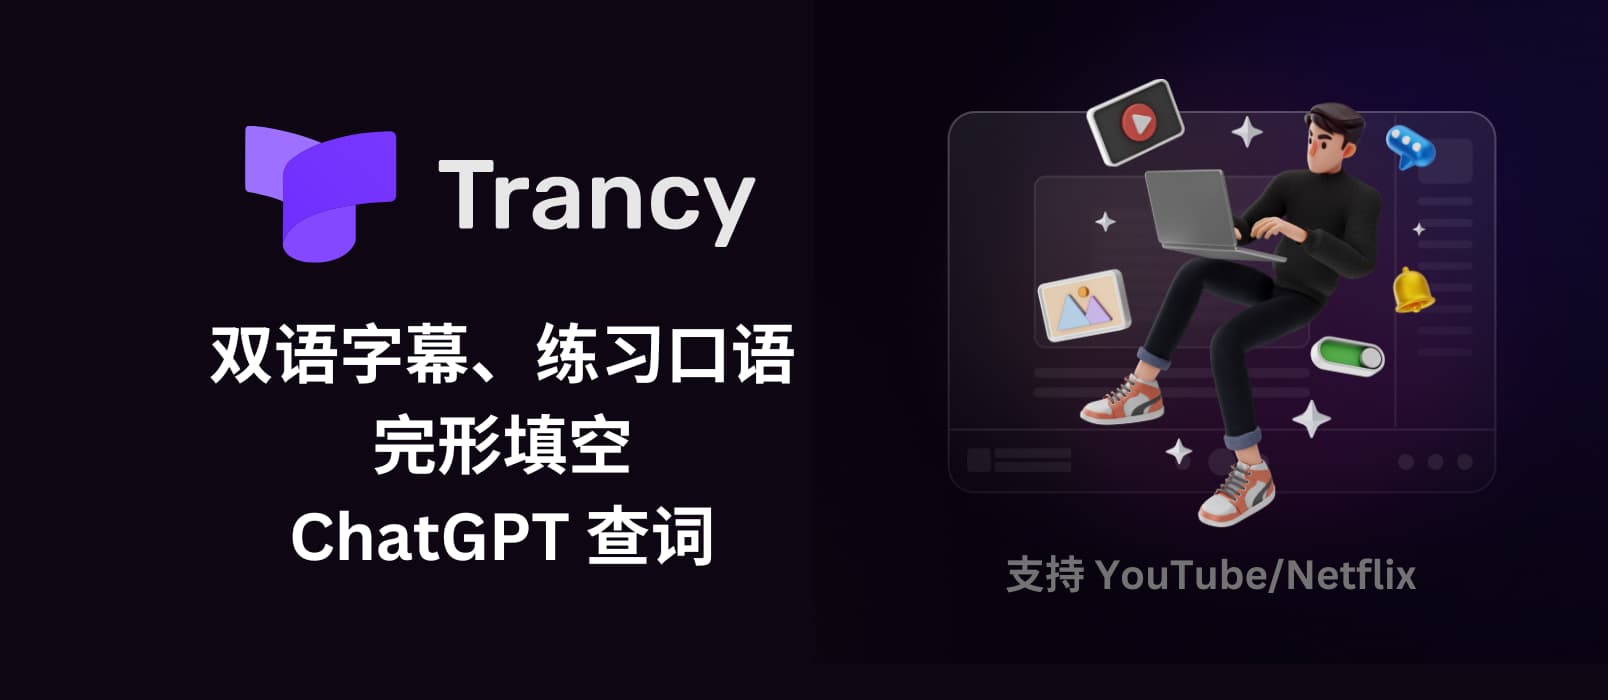 Trancy - 又来骗我学习外语，这次连完形填空都有了，还集成了 ChatGPT...